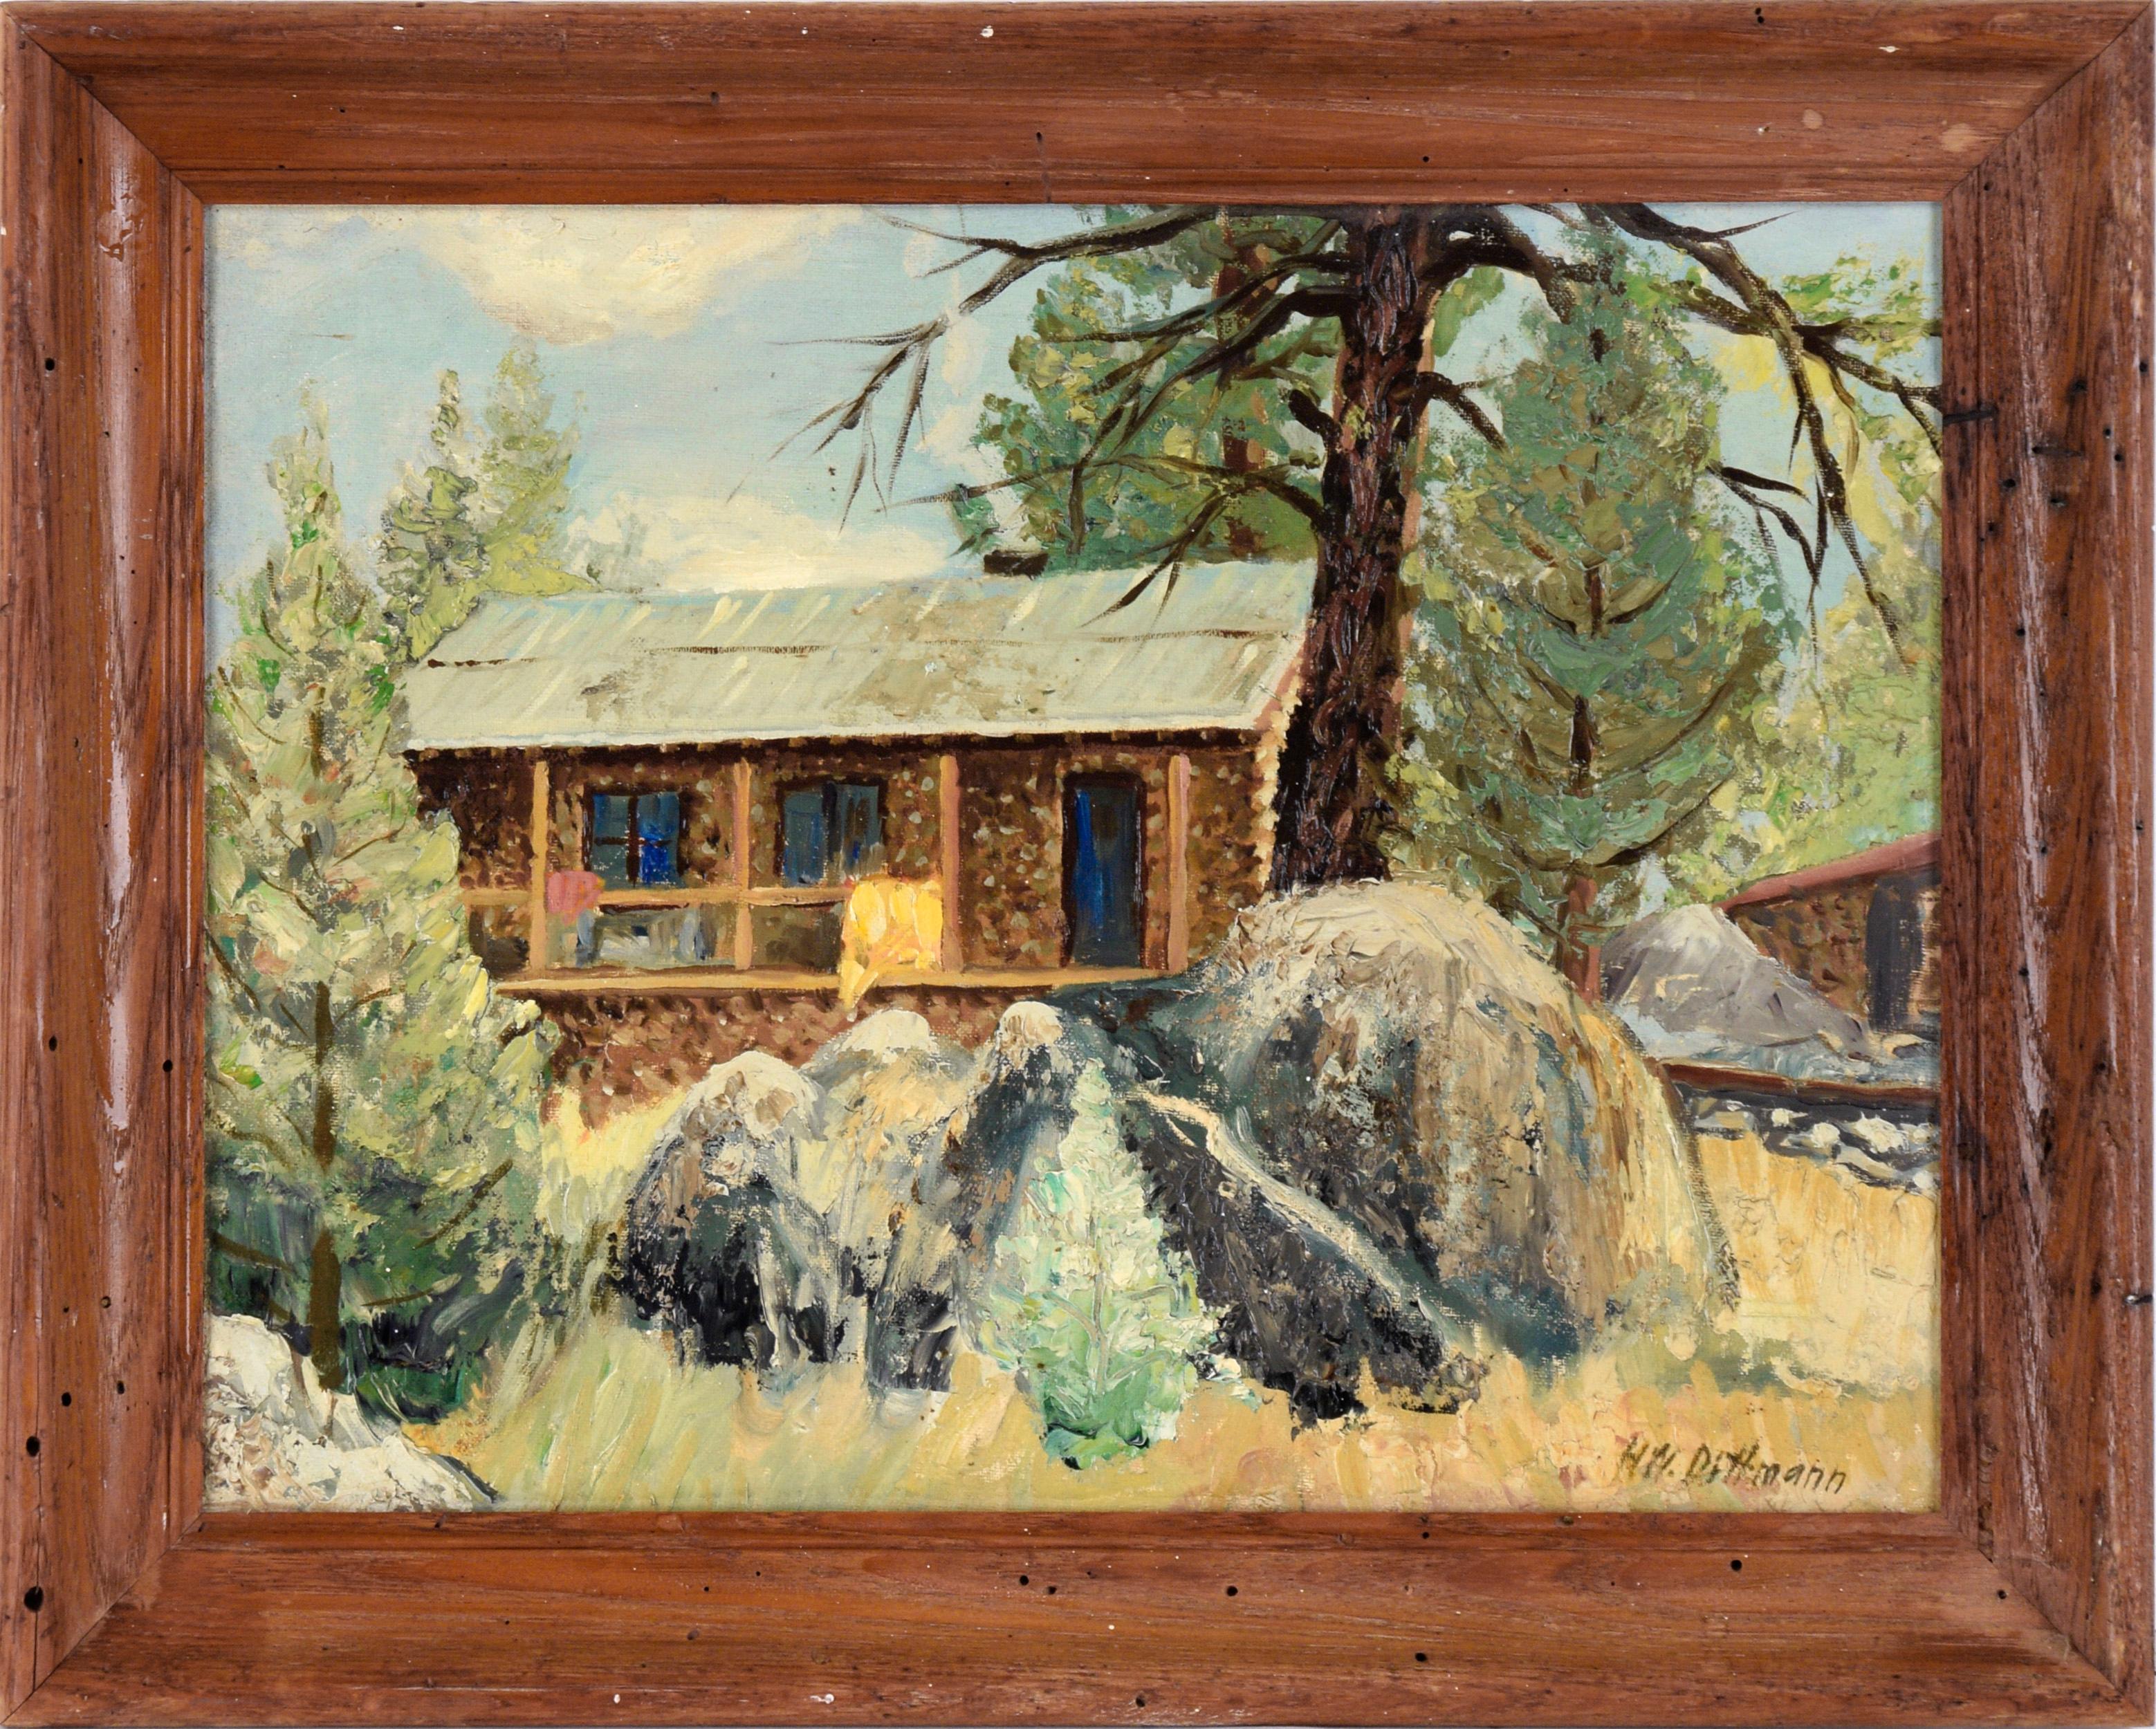 HW Dittmann Landscape Painting - "Mono Hot Springs Cabins, Fresno Co - Calif" Forest Landscape in Oil on Board